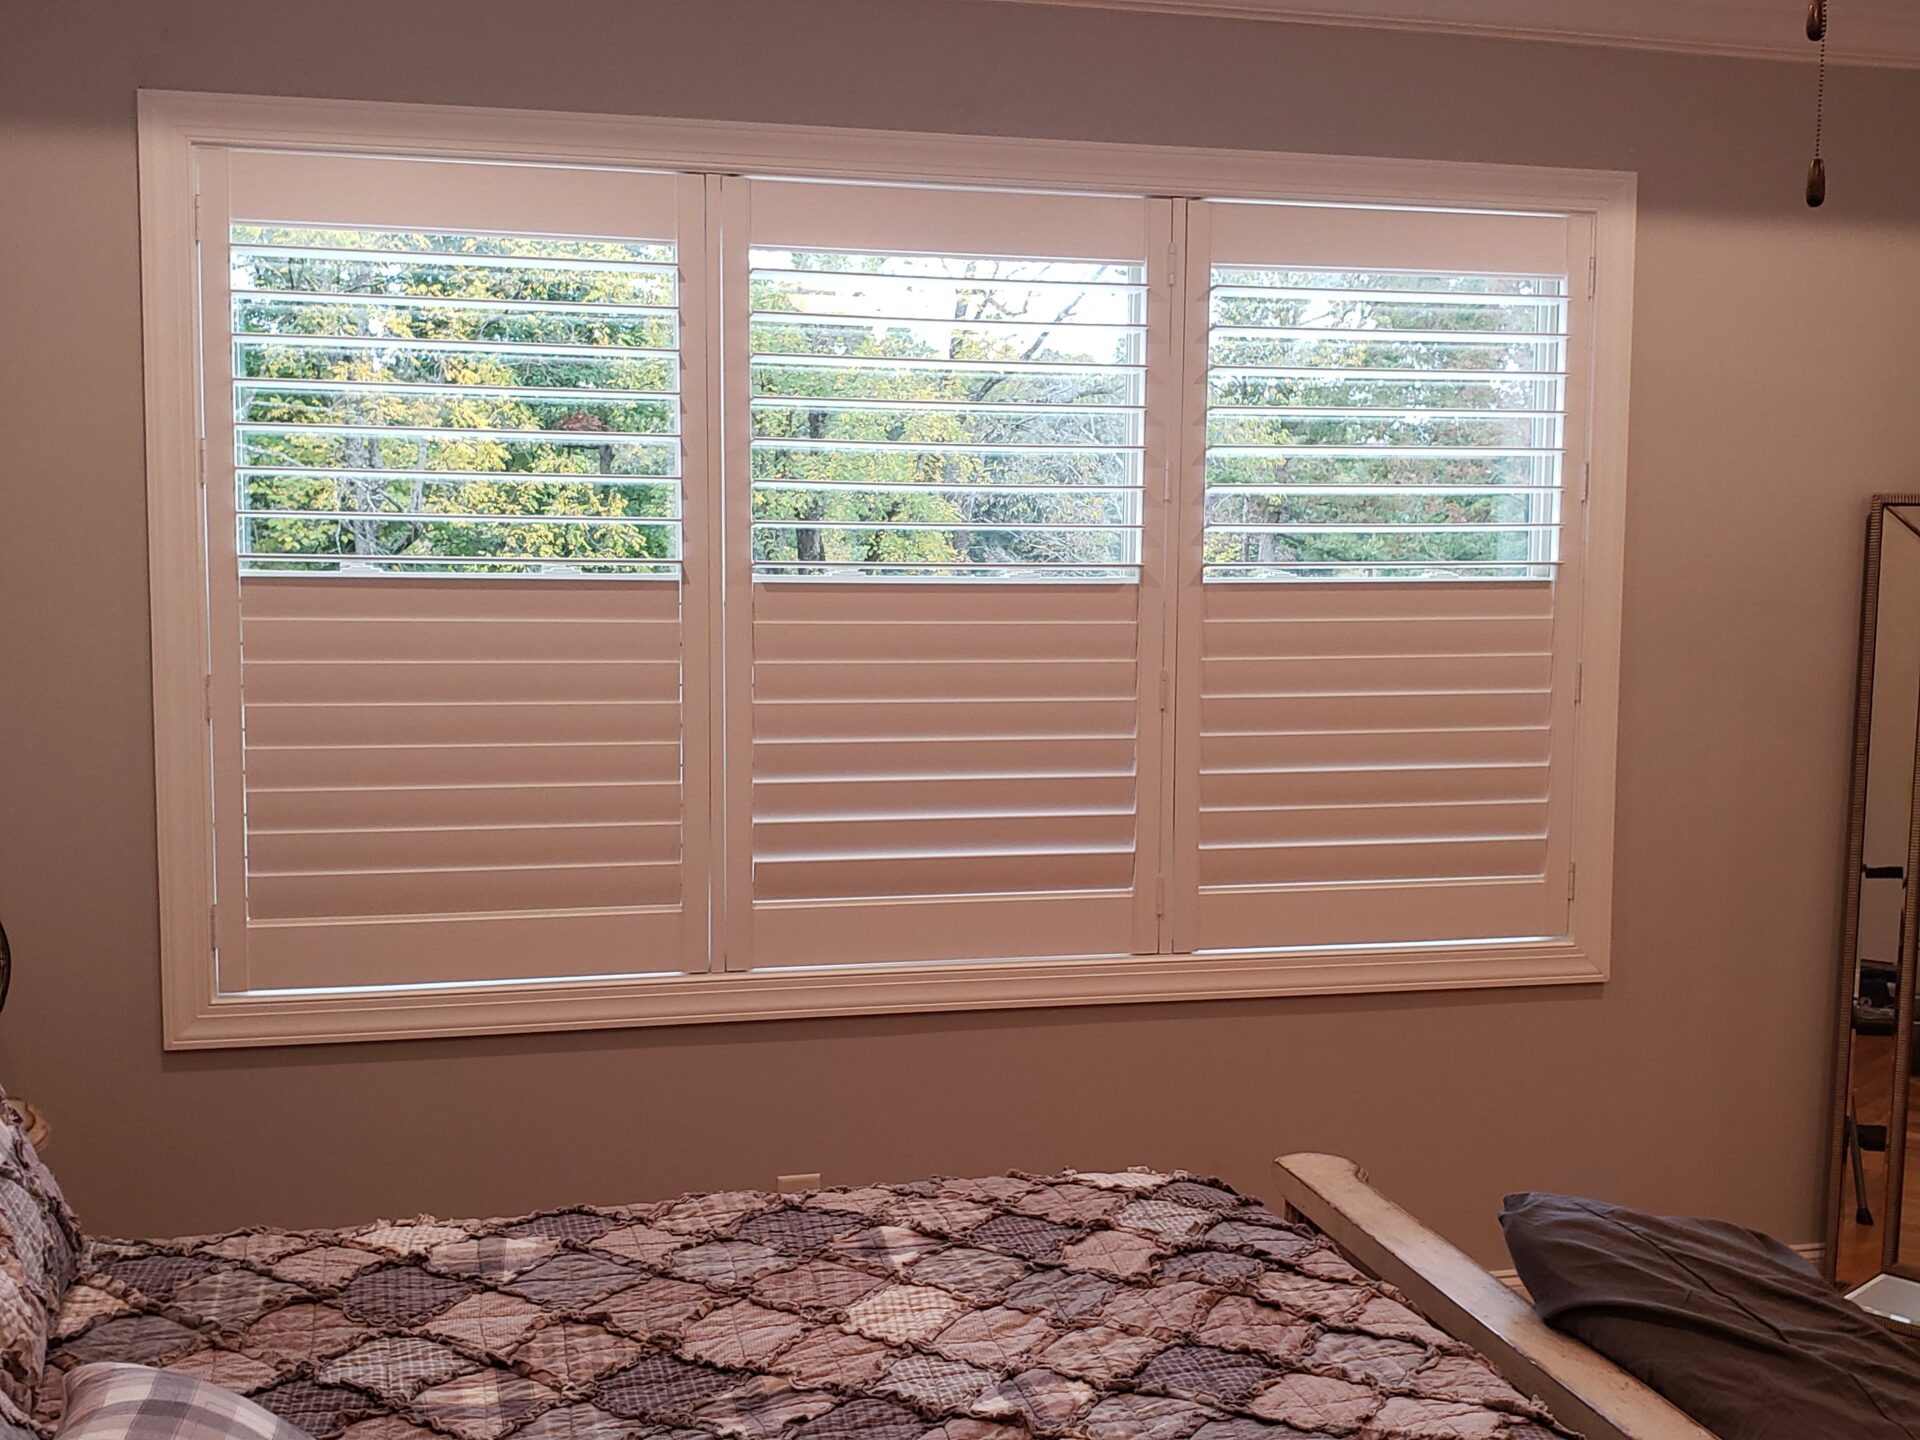 Bedroom Window Plantation Shutters - Custom, Motorized Window Treatments, Blind Repair, Custom Blinds, Roman Shades, Faux Wood Blinds | Nashville, TN